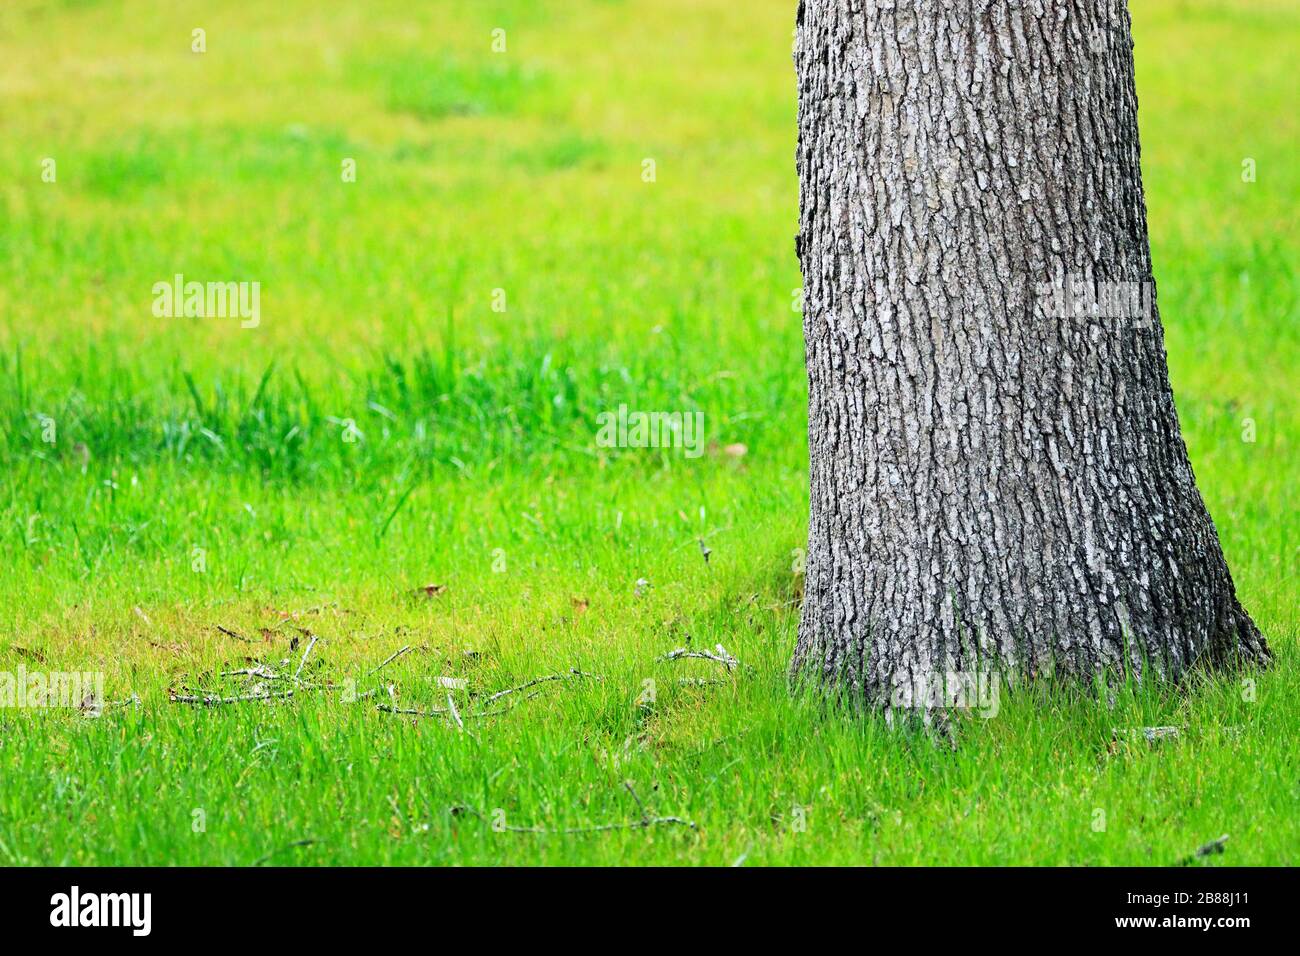 A tree trunk amid a grassy green field. Stock Photo